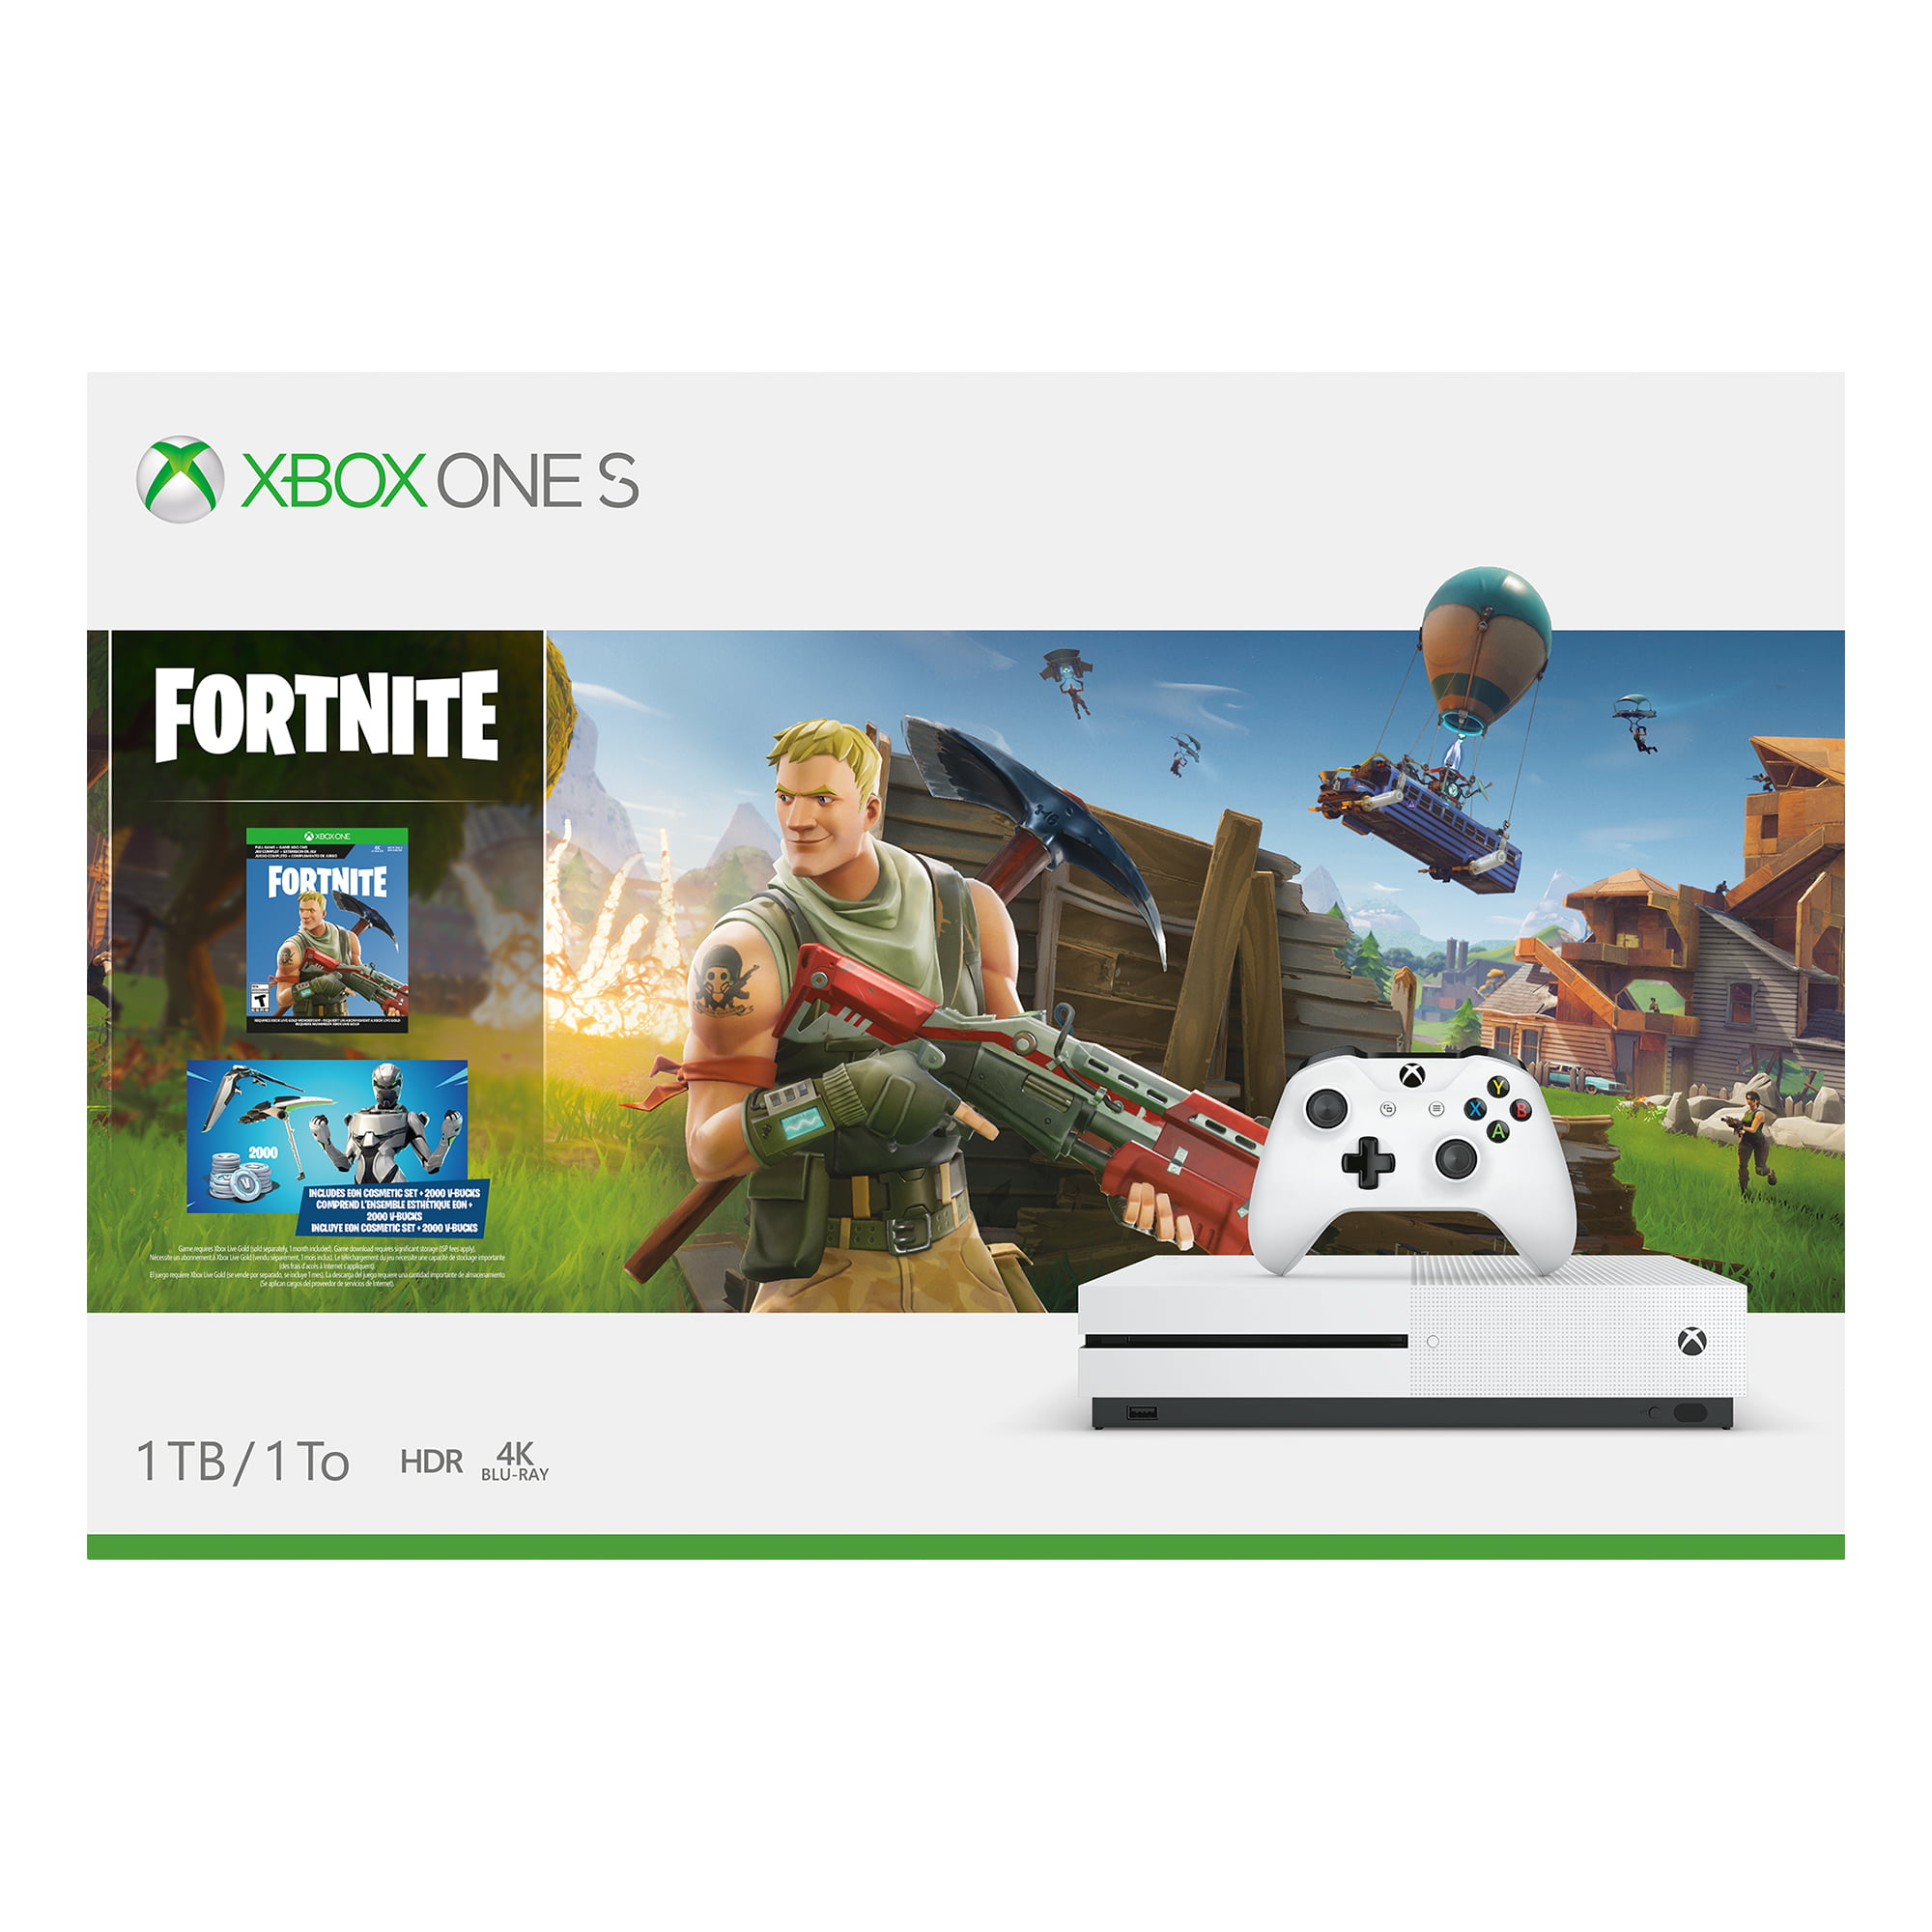 Microsoft Xbox One S 1TB Fortnite Bundle, White, 234-00703 - Walmart.com - 